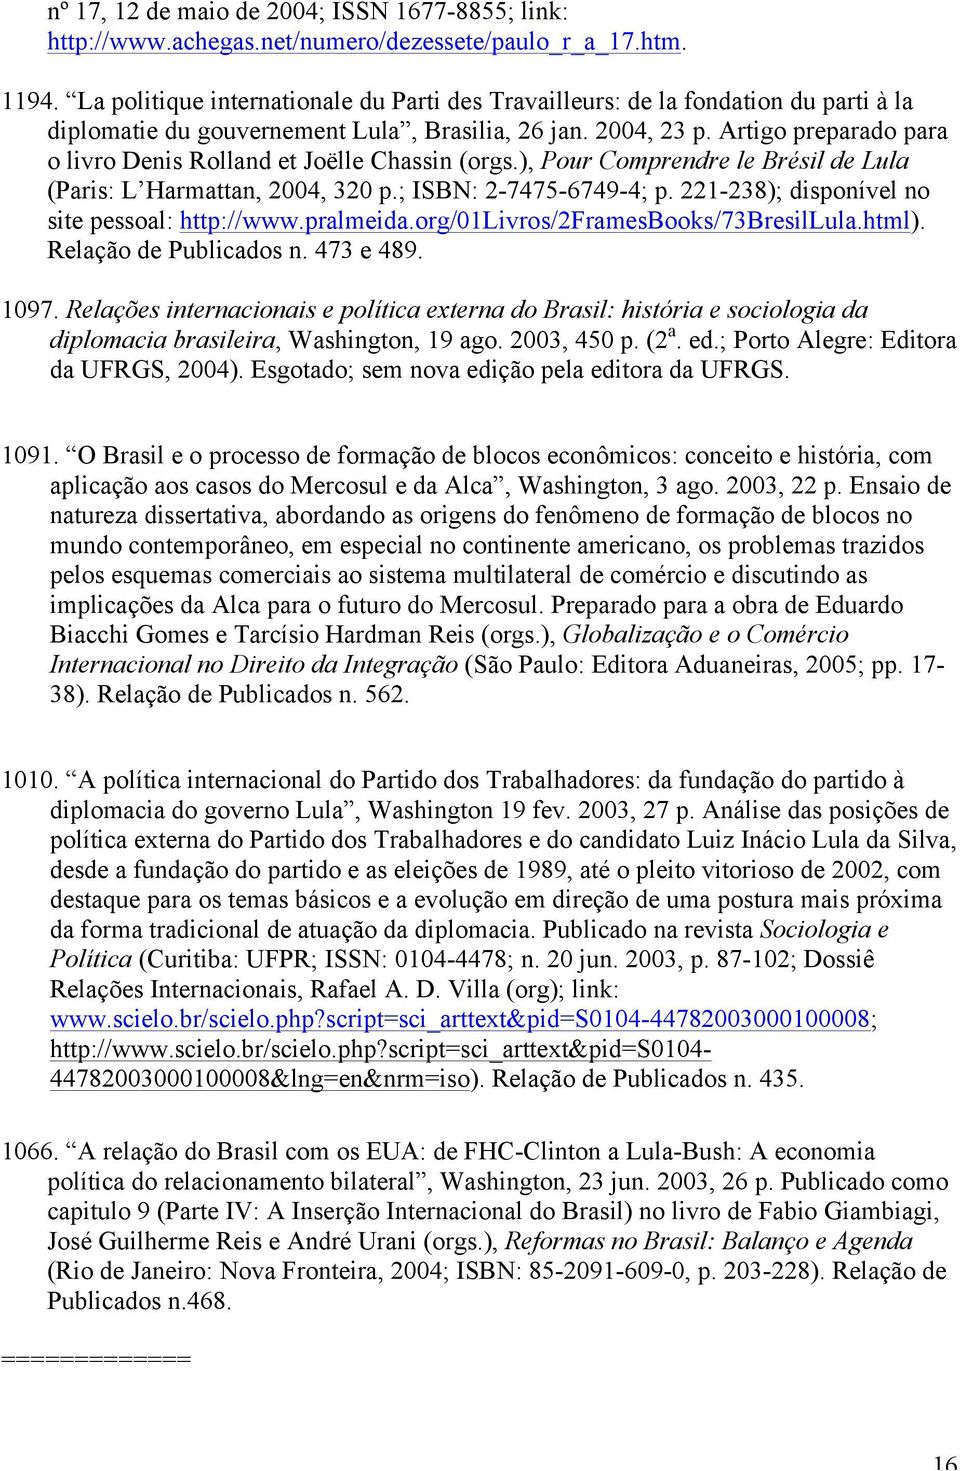 Artigo preparado para o livro Denis Rolland et Joëlle Chassin (orgs.), Pour Comprendre le Brésil de Lula (Paris: L Harmattan, 2004, 320 p.; ISBN: 2-7475-6749-4; p.